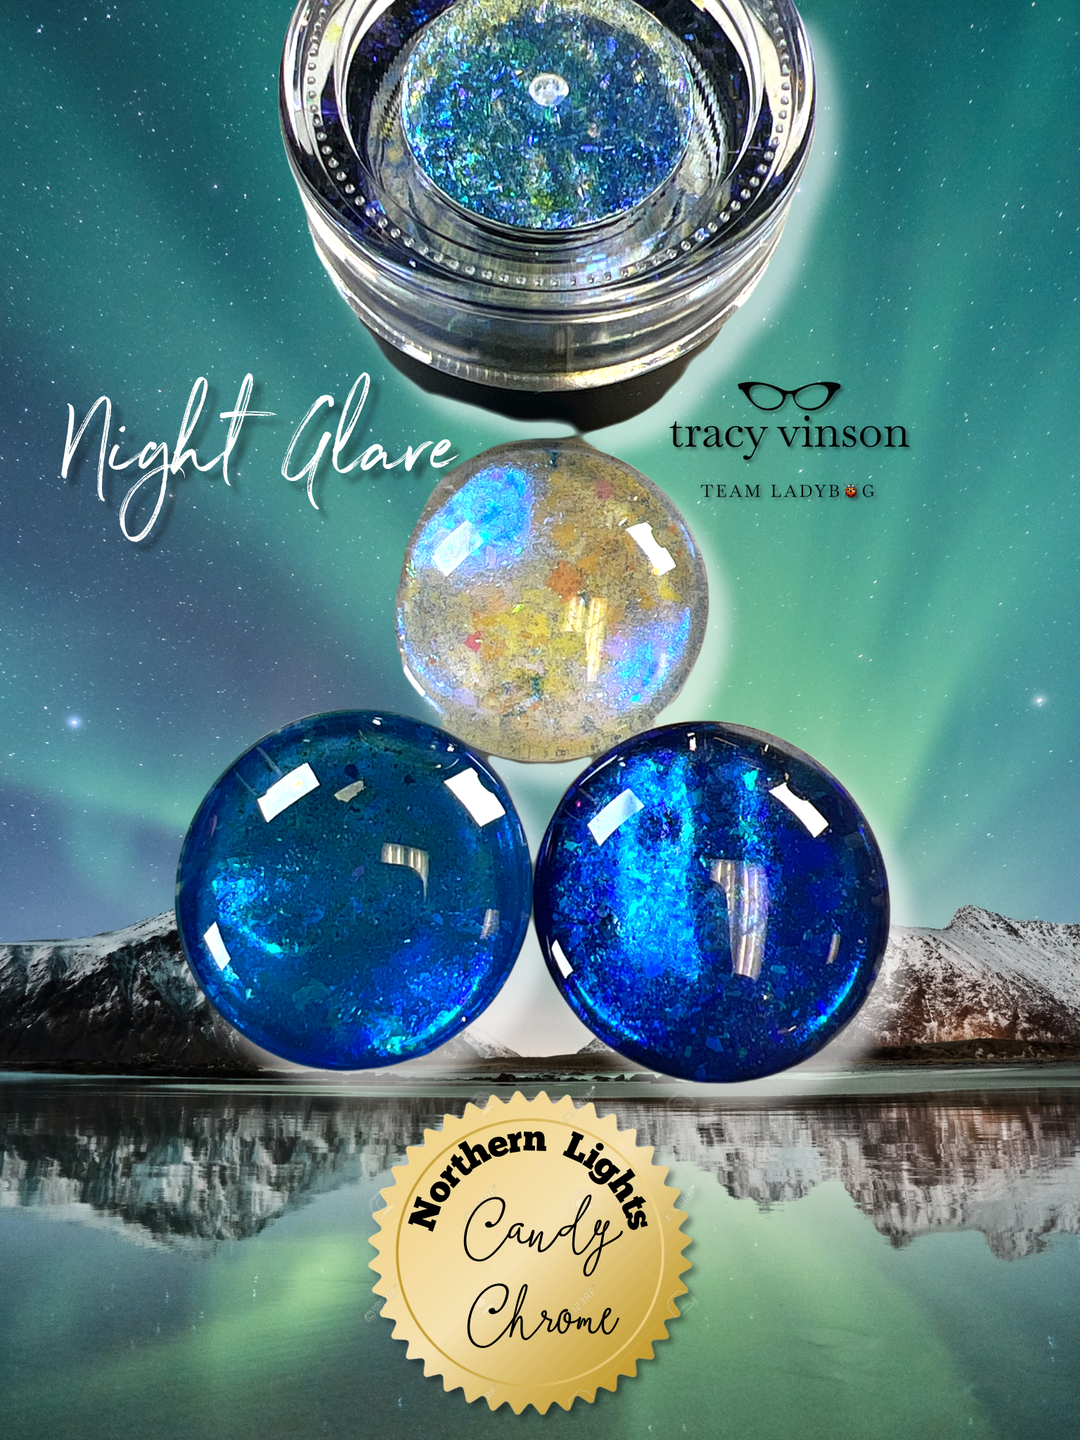 MM - Northern Lights Candy Chrome -- "Night Glare"